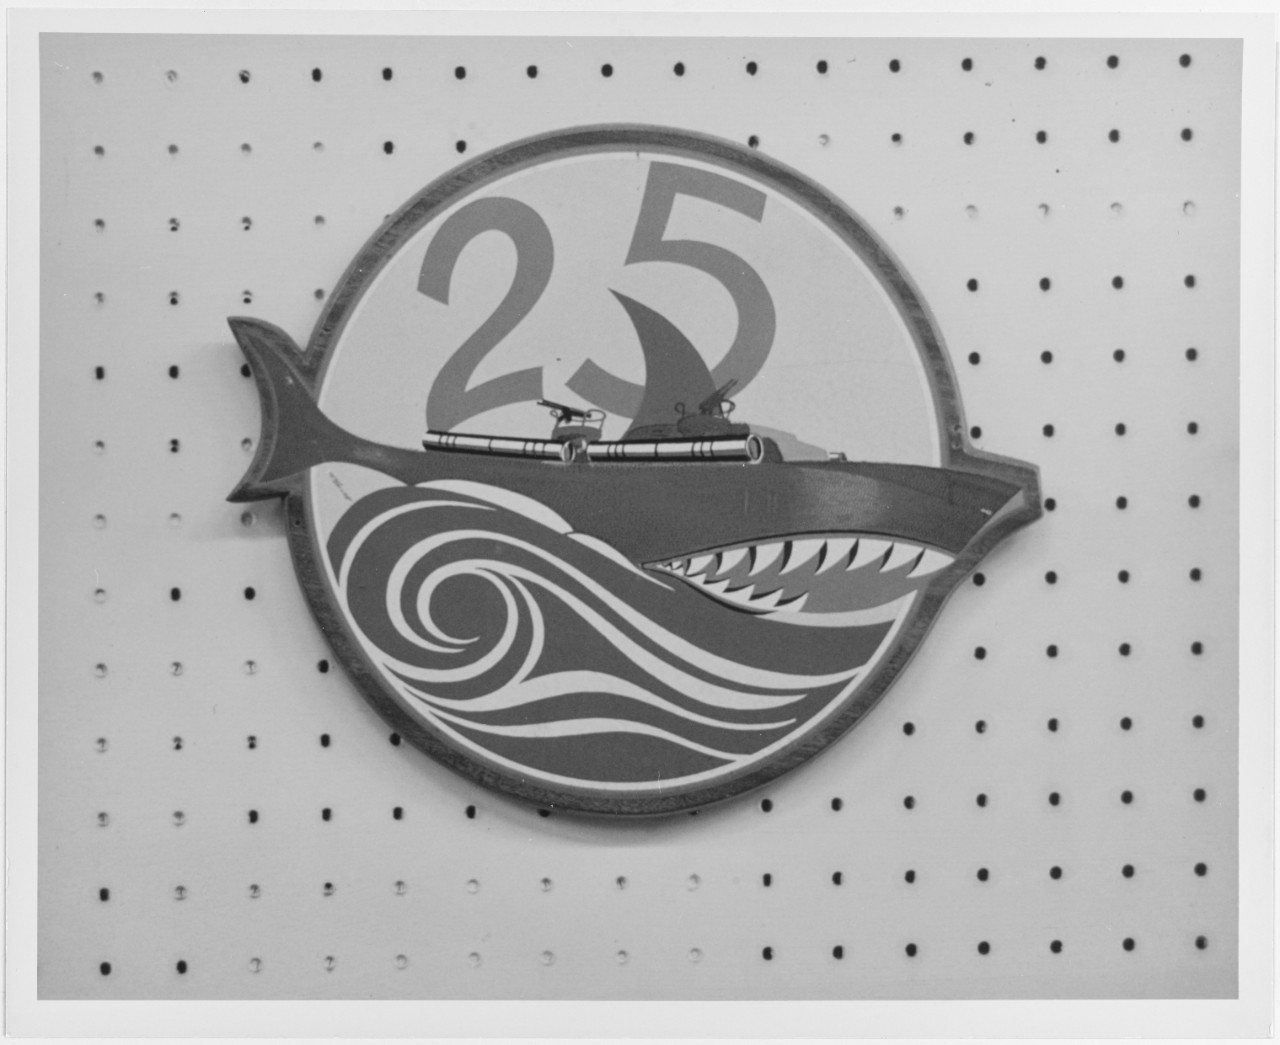 Insignia:  Motor Torpedo Boat Squadron 25 (MTB RON 25)